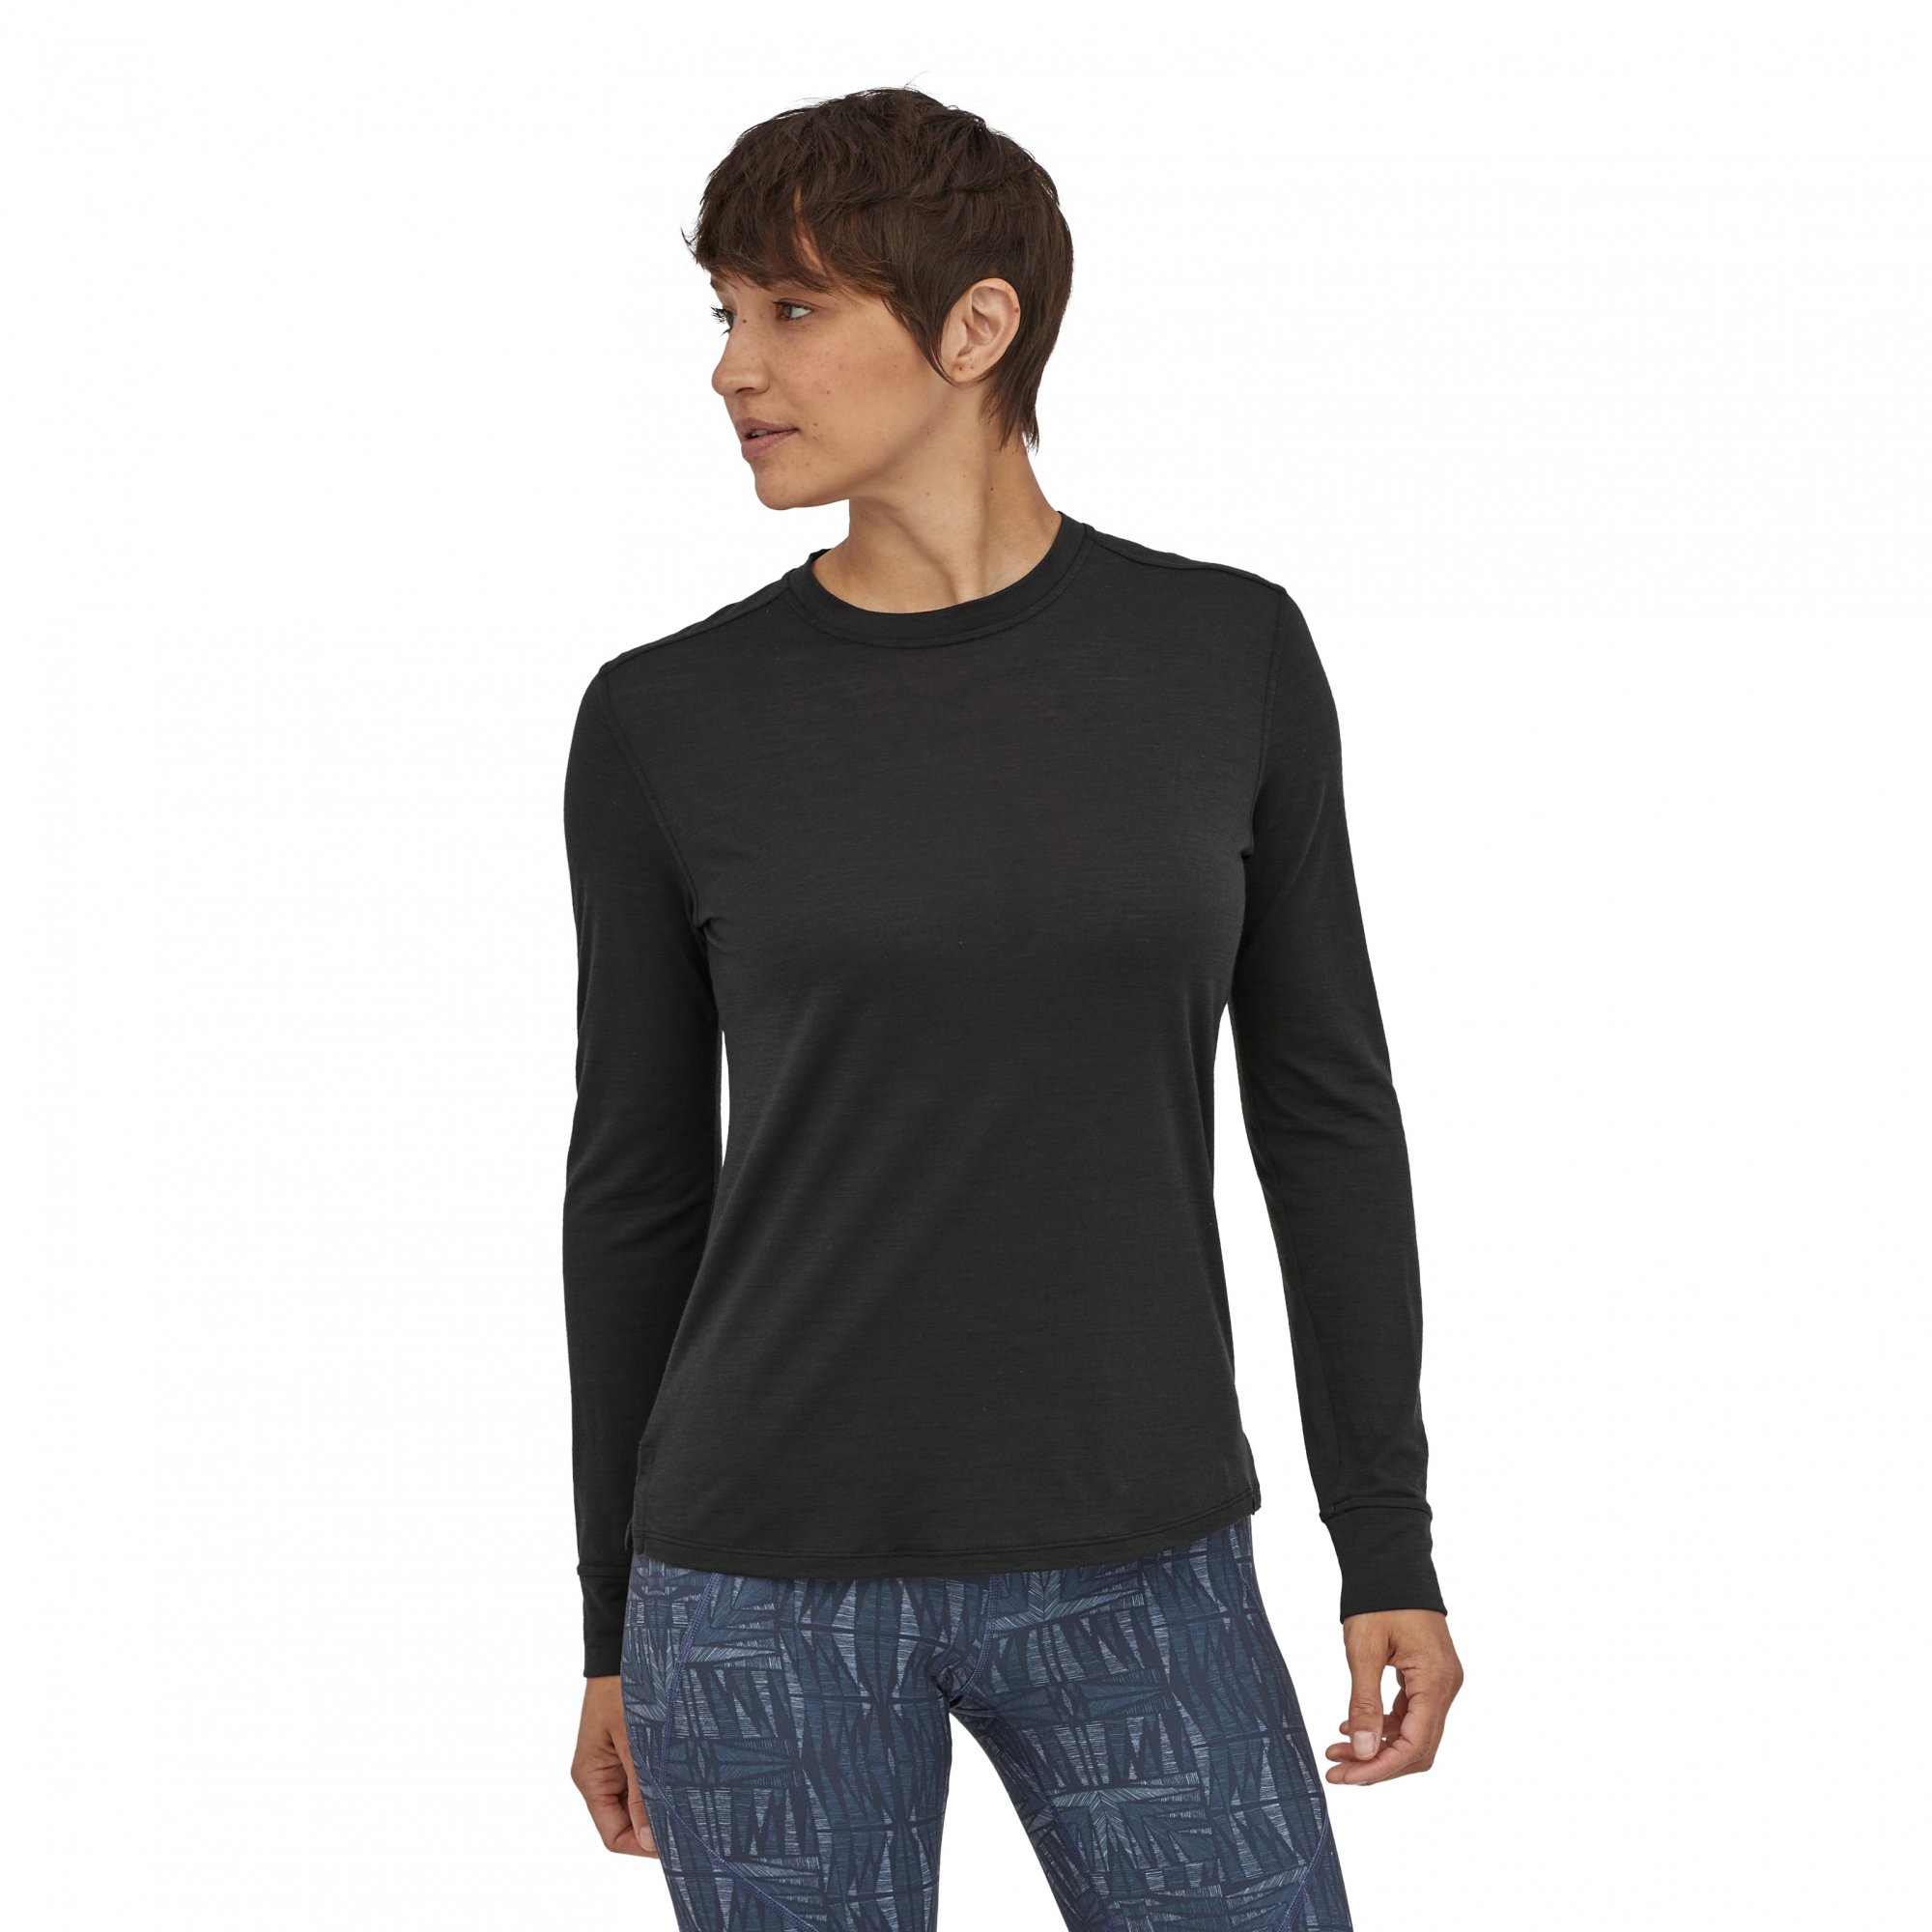 PATAGONIA Women's Long-Sleeved Capilene® Cool Merino Shirt Black